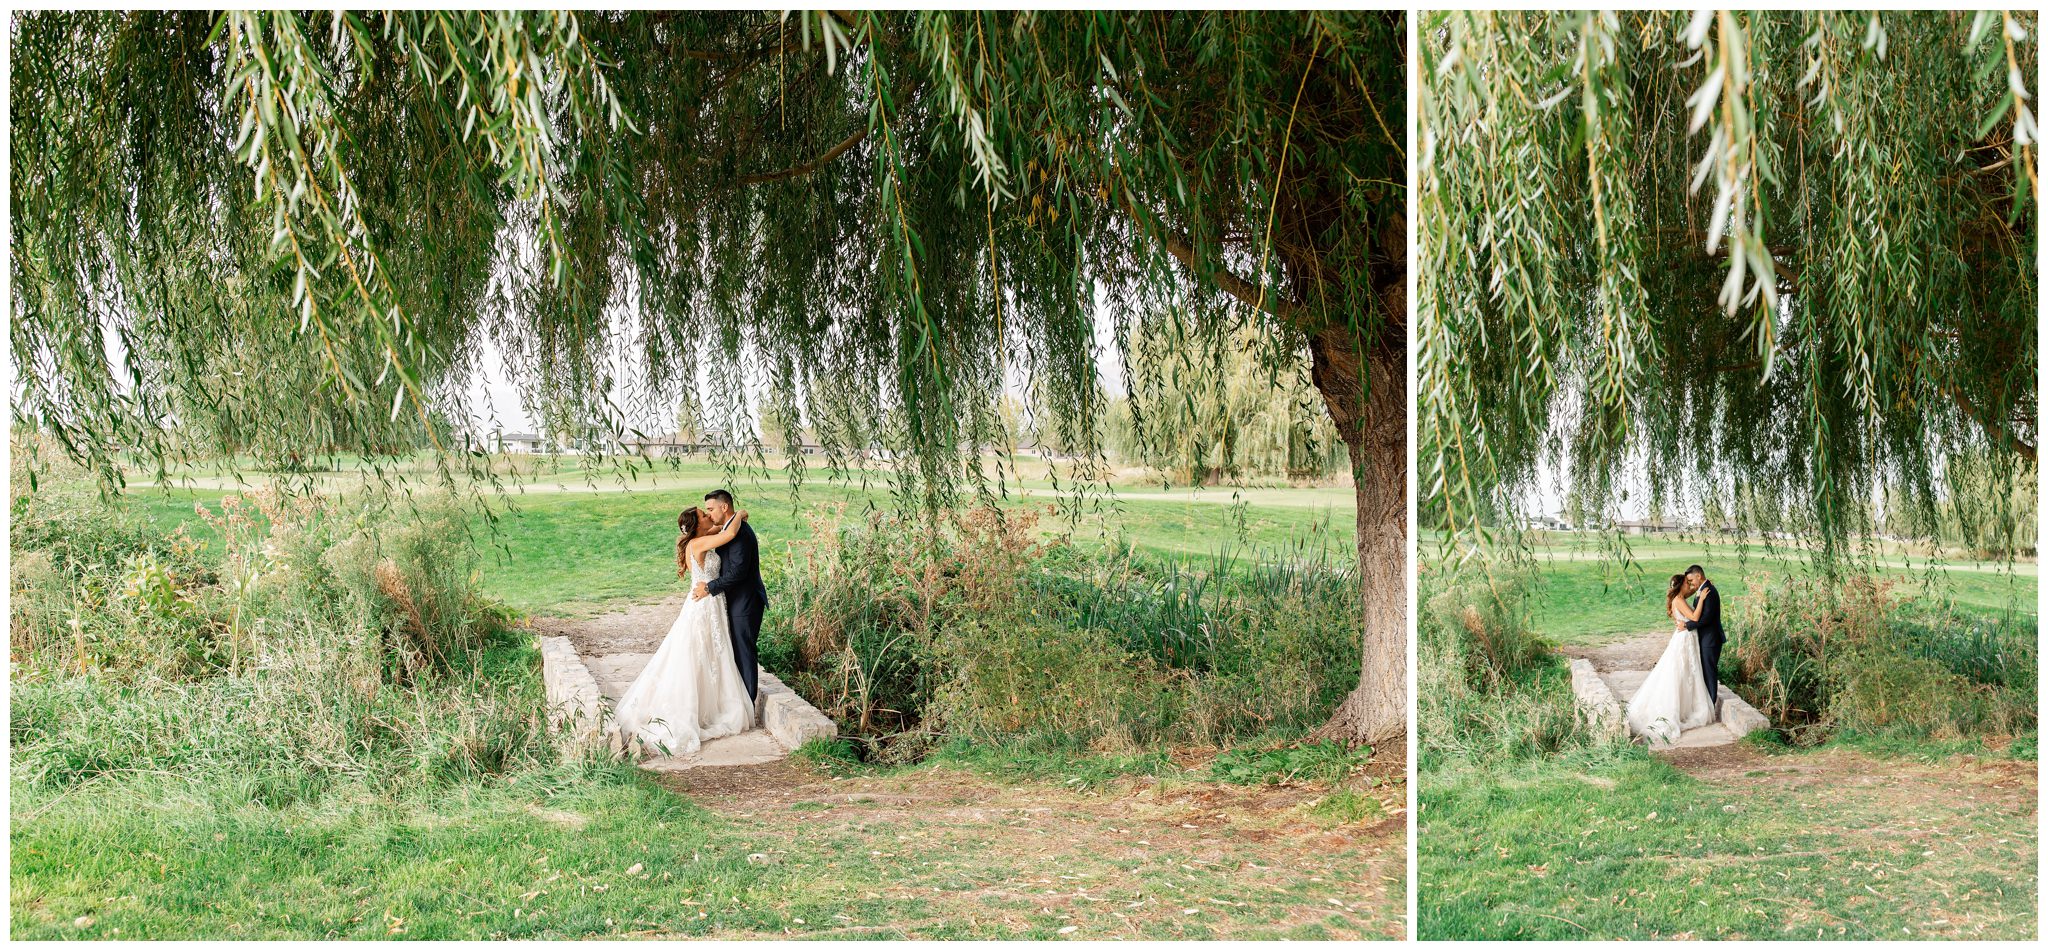 Bride and Groom pictures near willow tree at Sleepy Ridge wedding venue